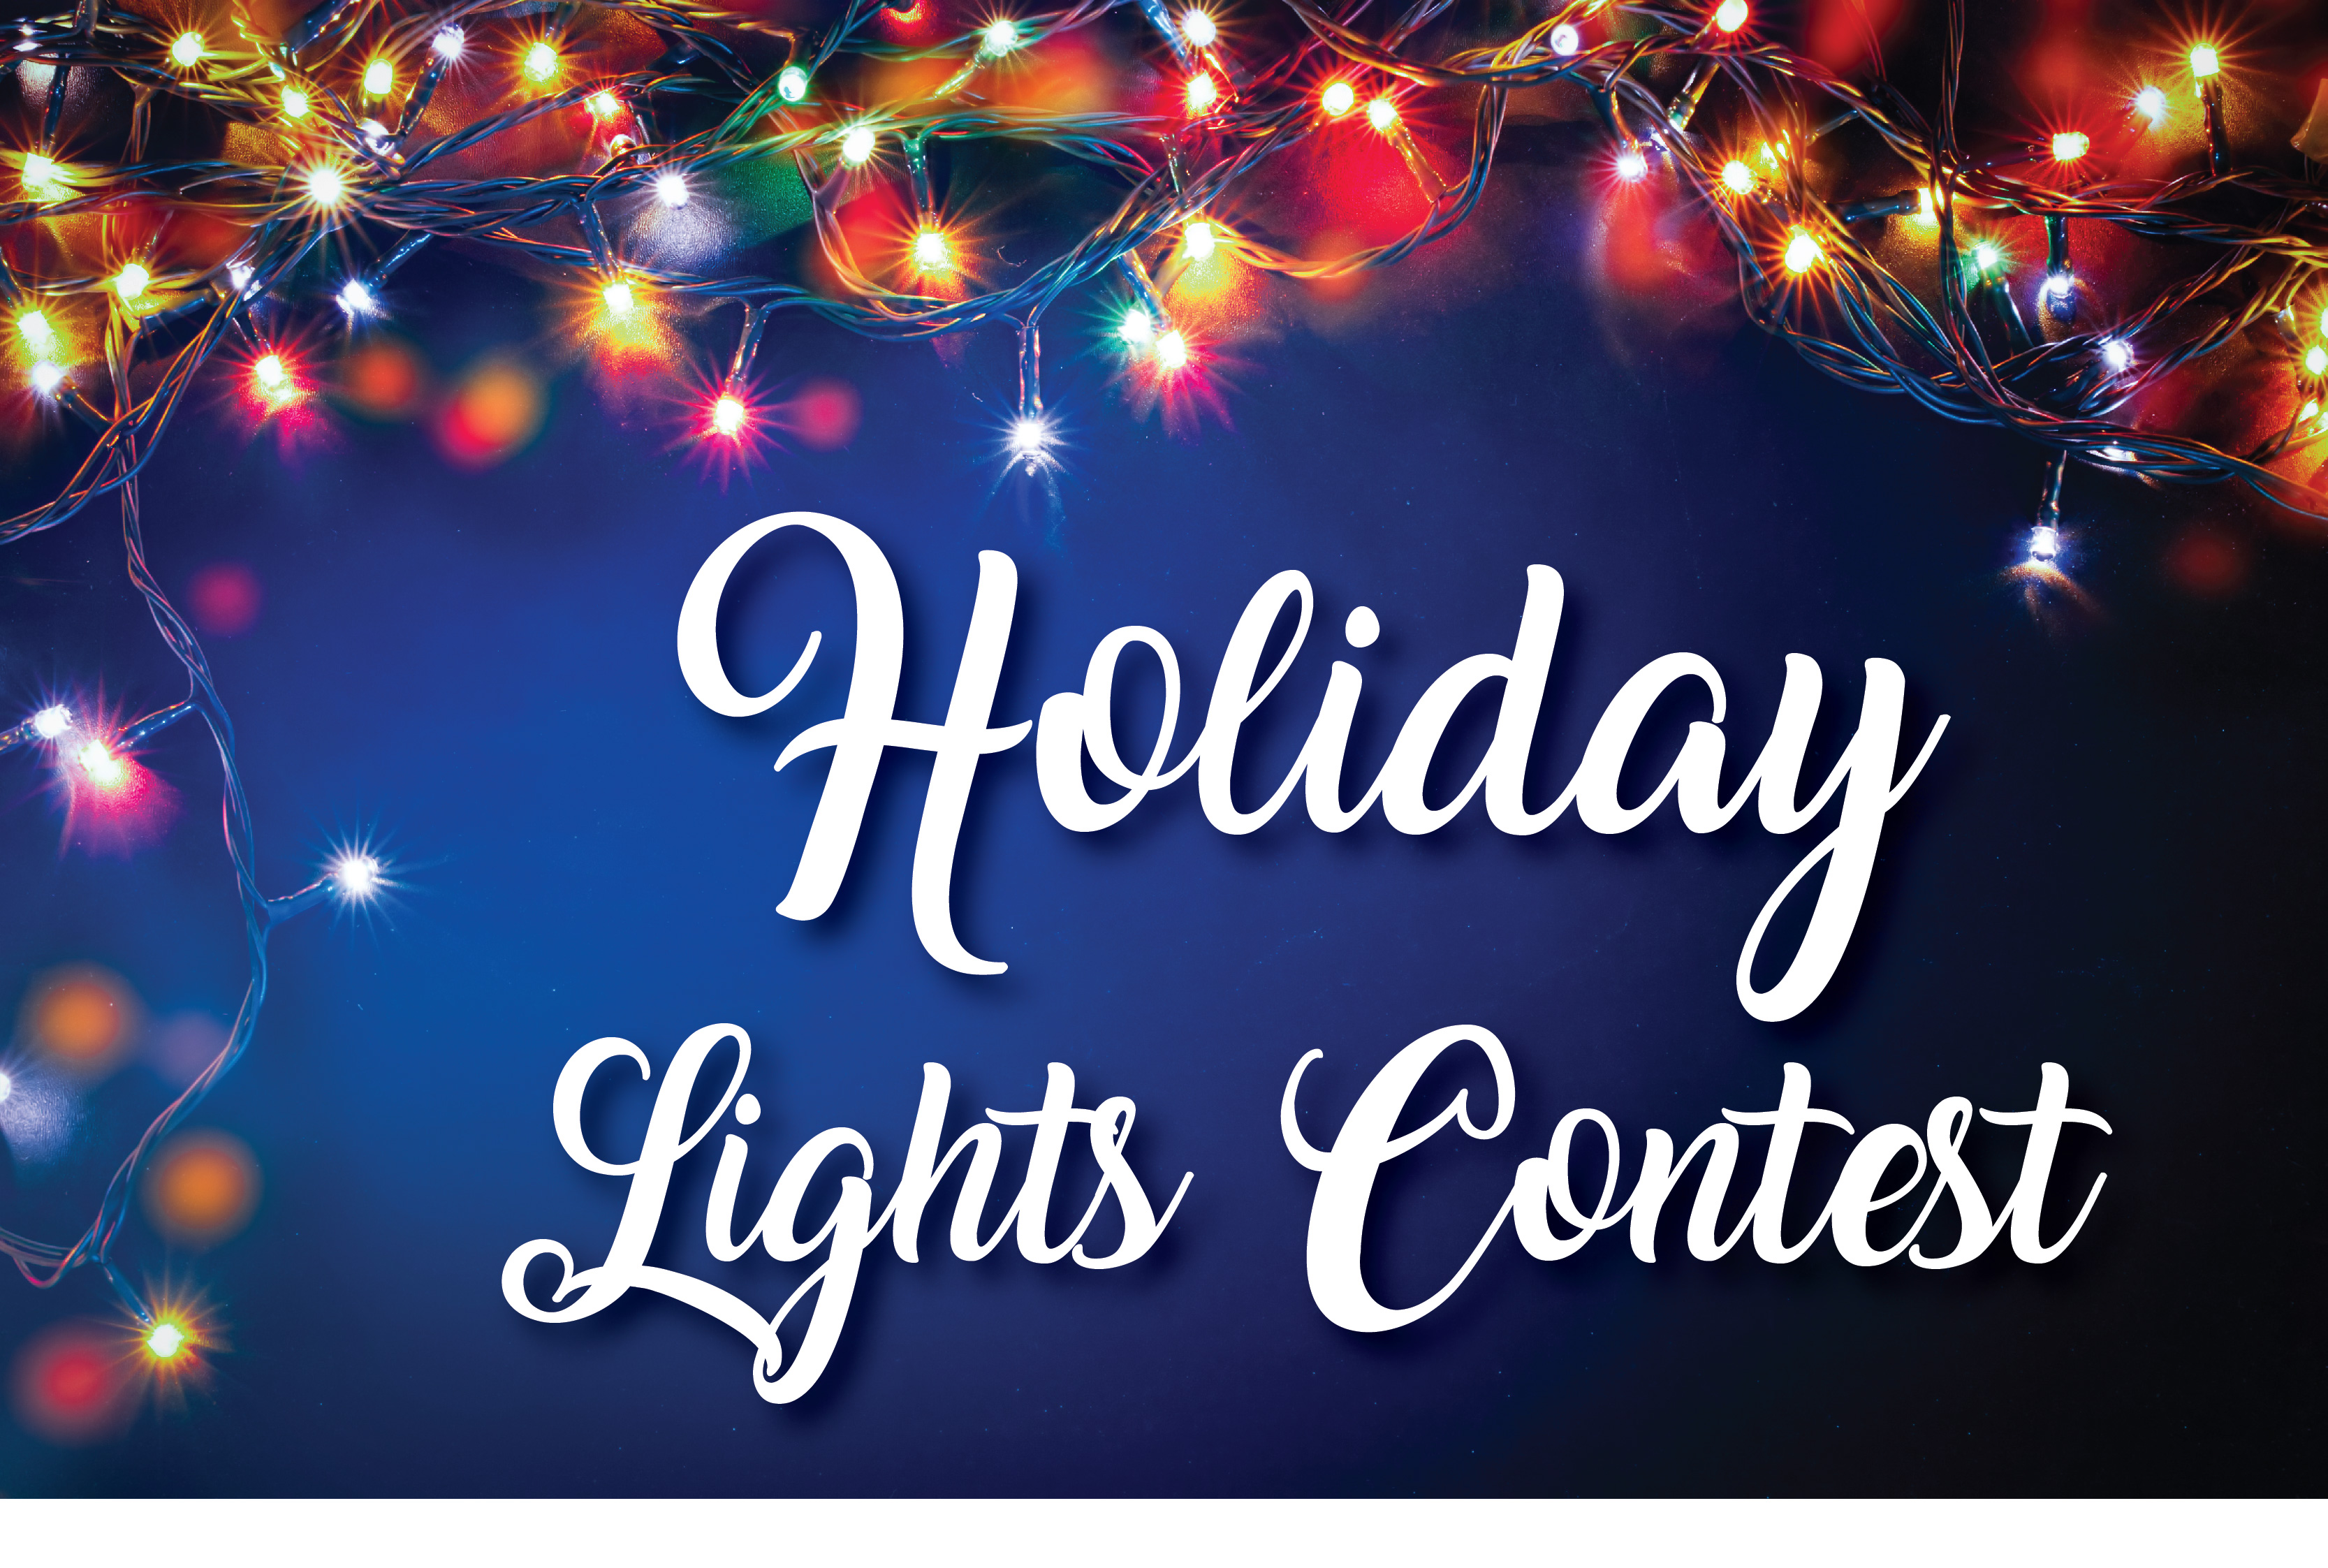 Cross Creek Ranch Holiday Lights Contest